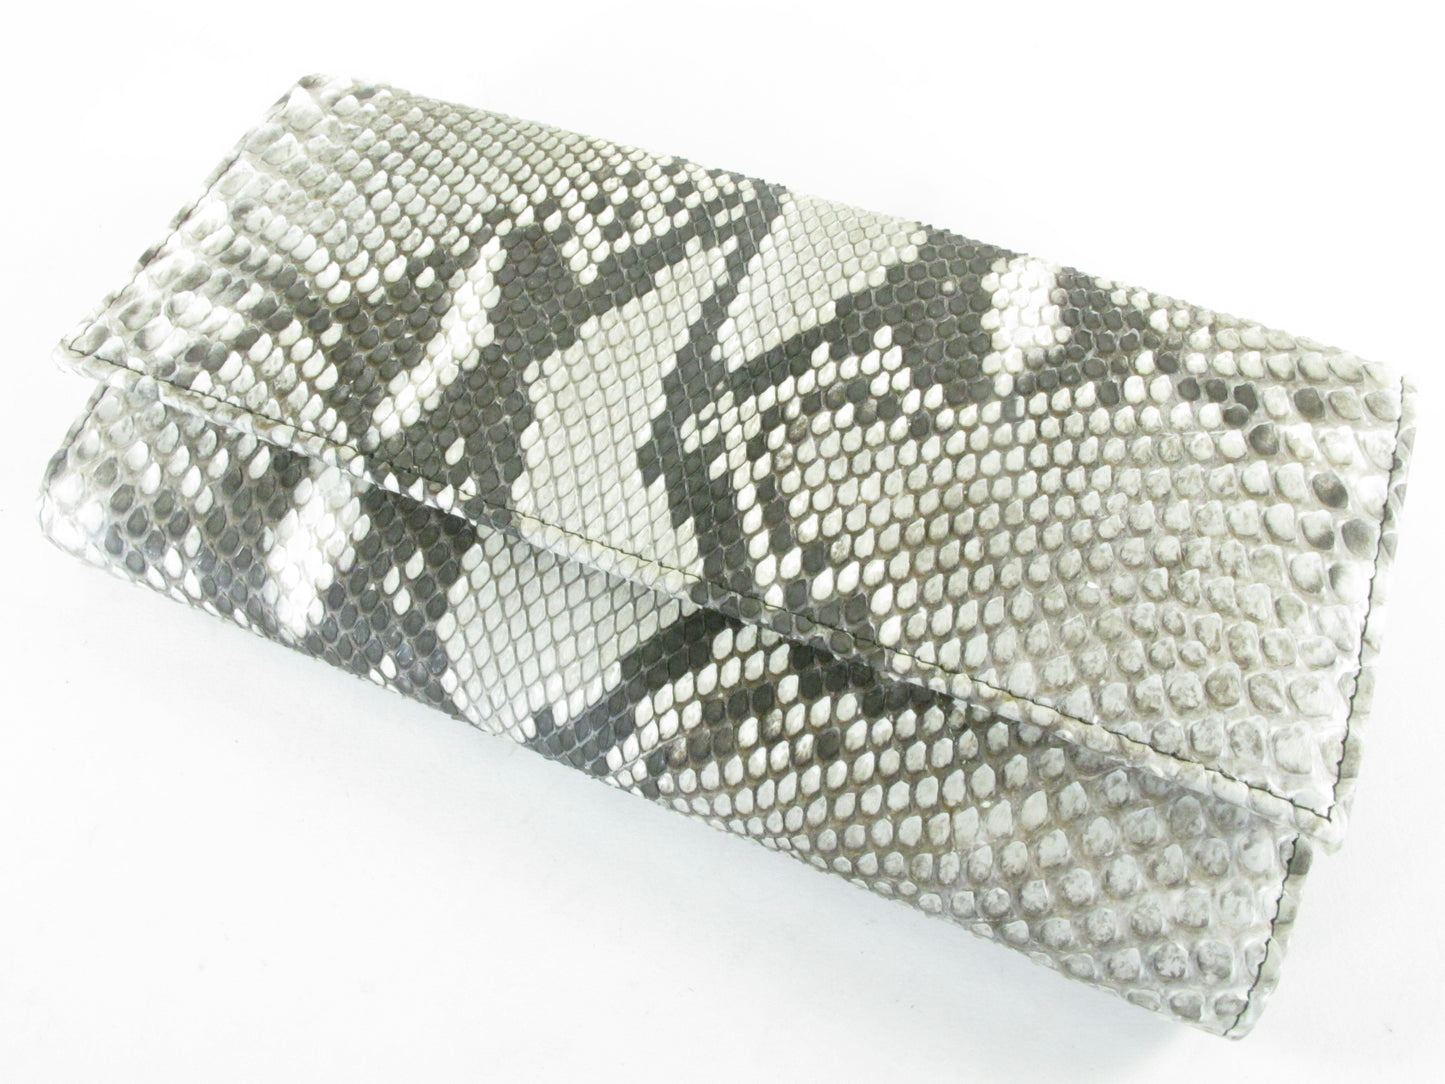 PELGIO Genuine Python Skin Leather Women's Shoulder Bag Clutch Wallet Purse